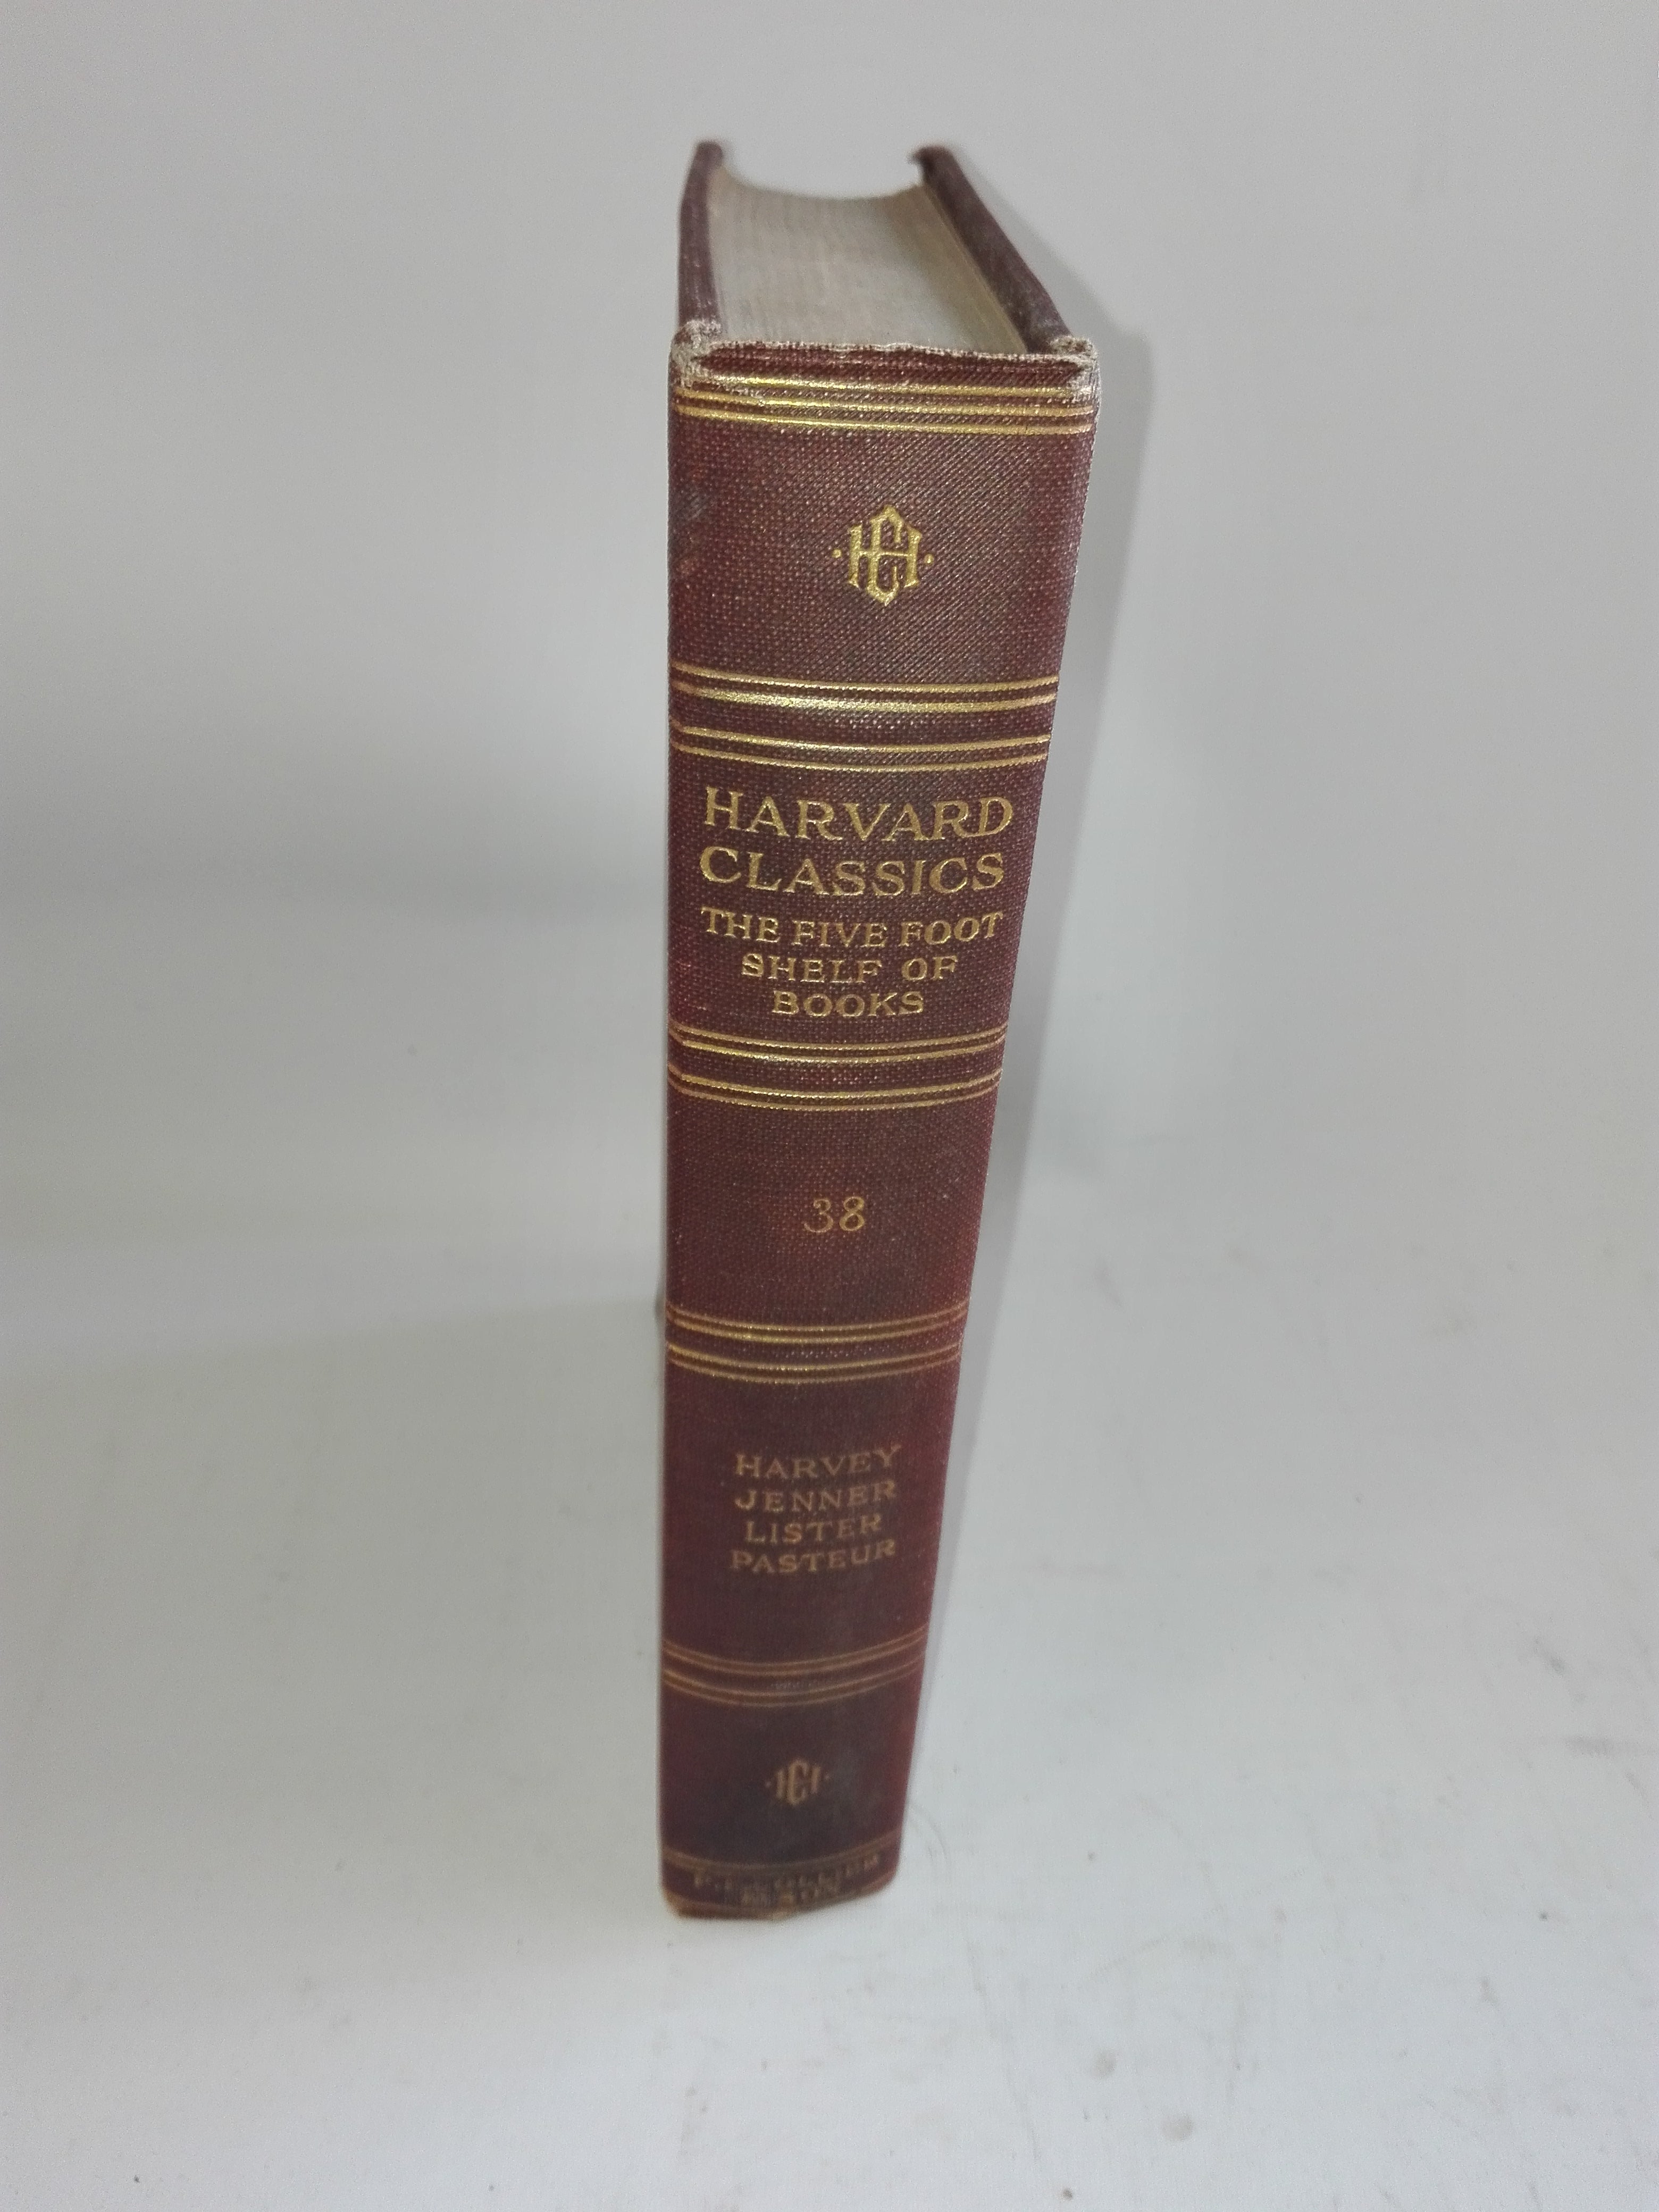 Harvard Classics The Five Foot Shelf Of Books 38